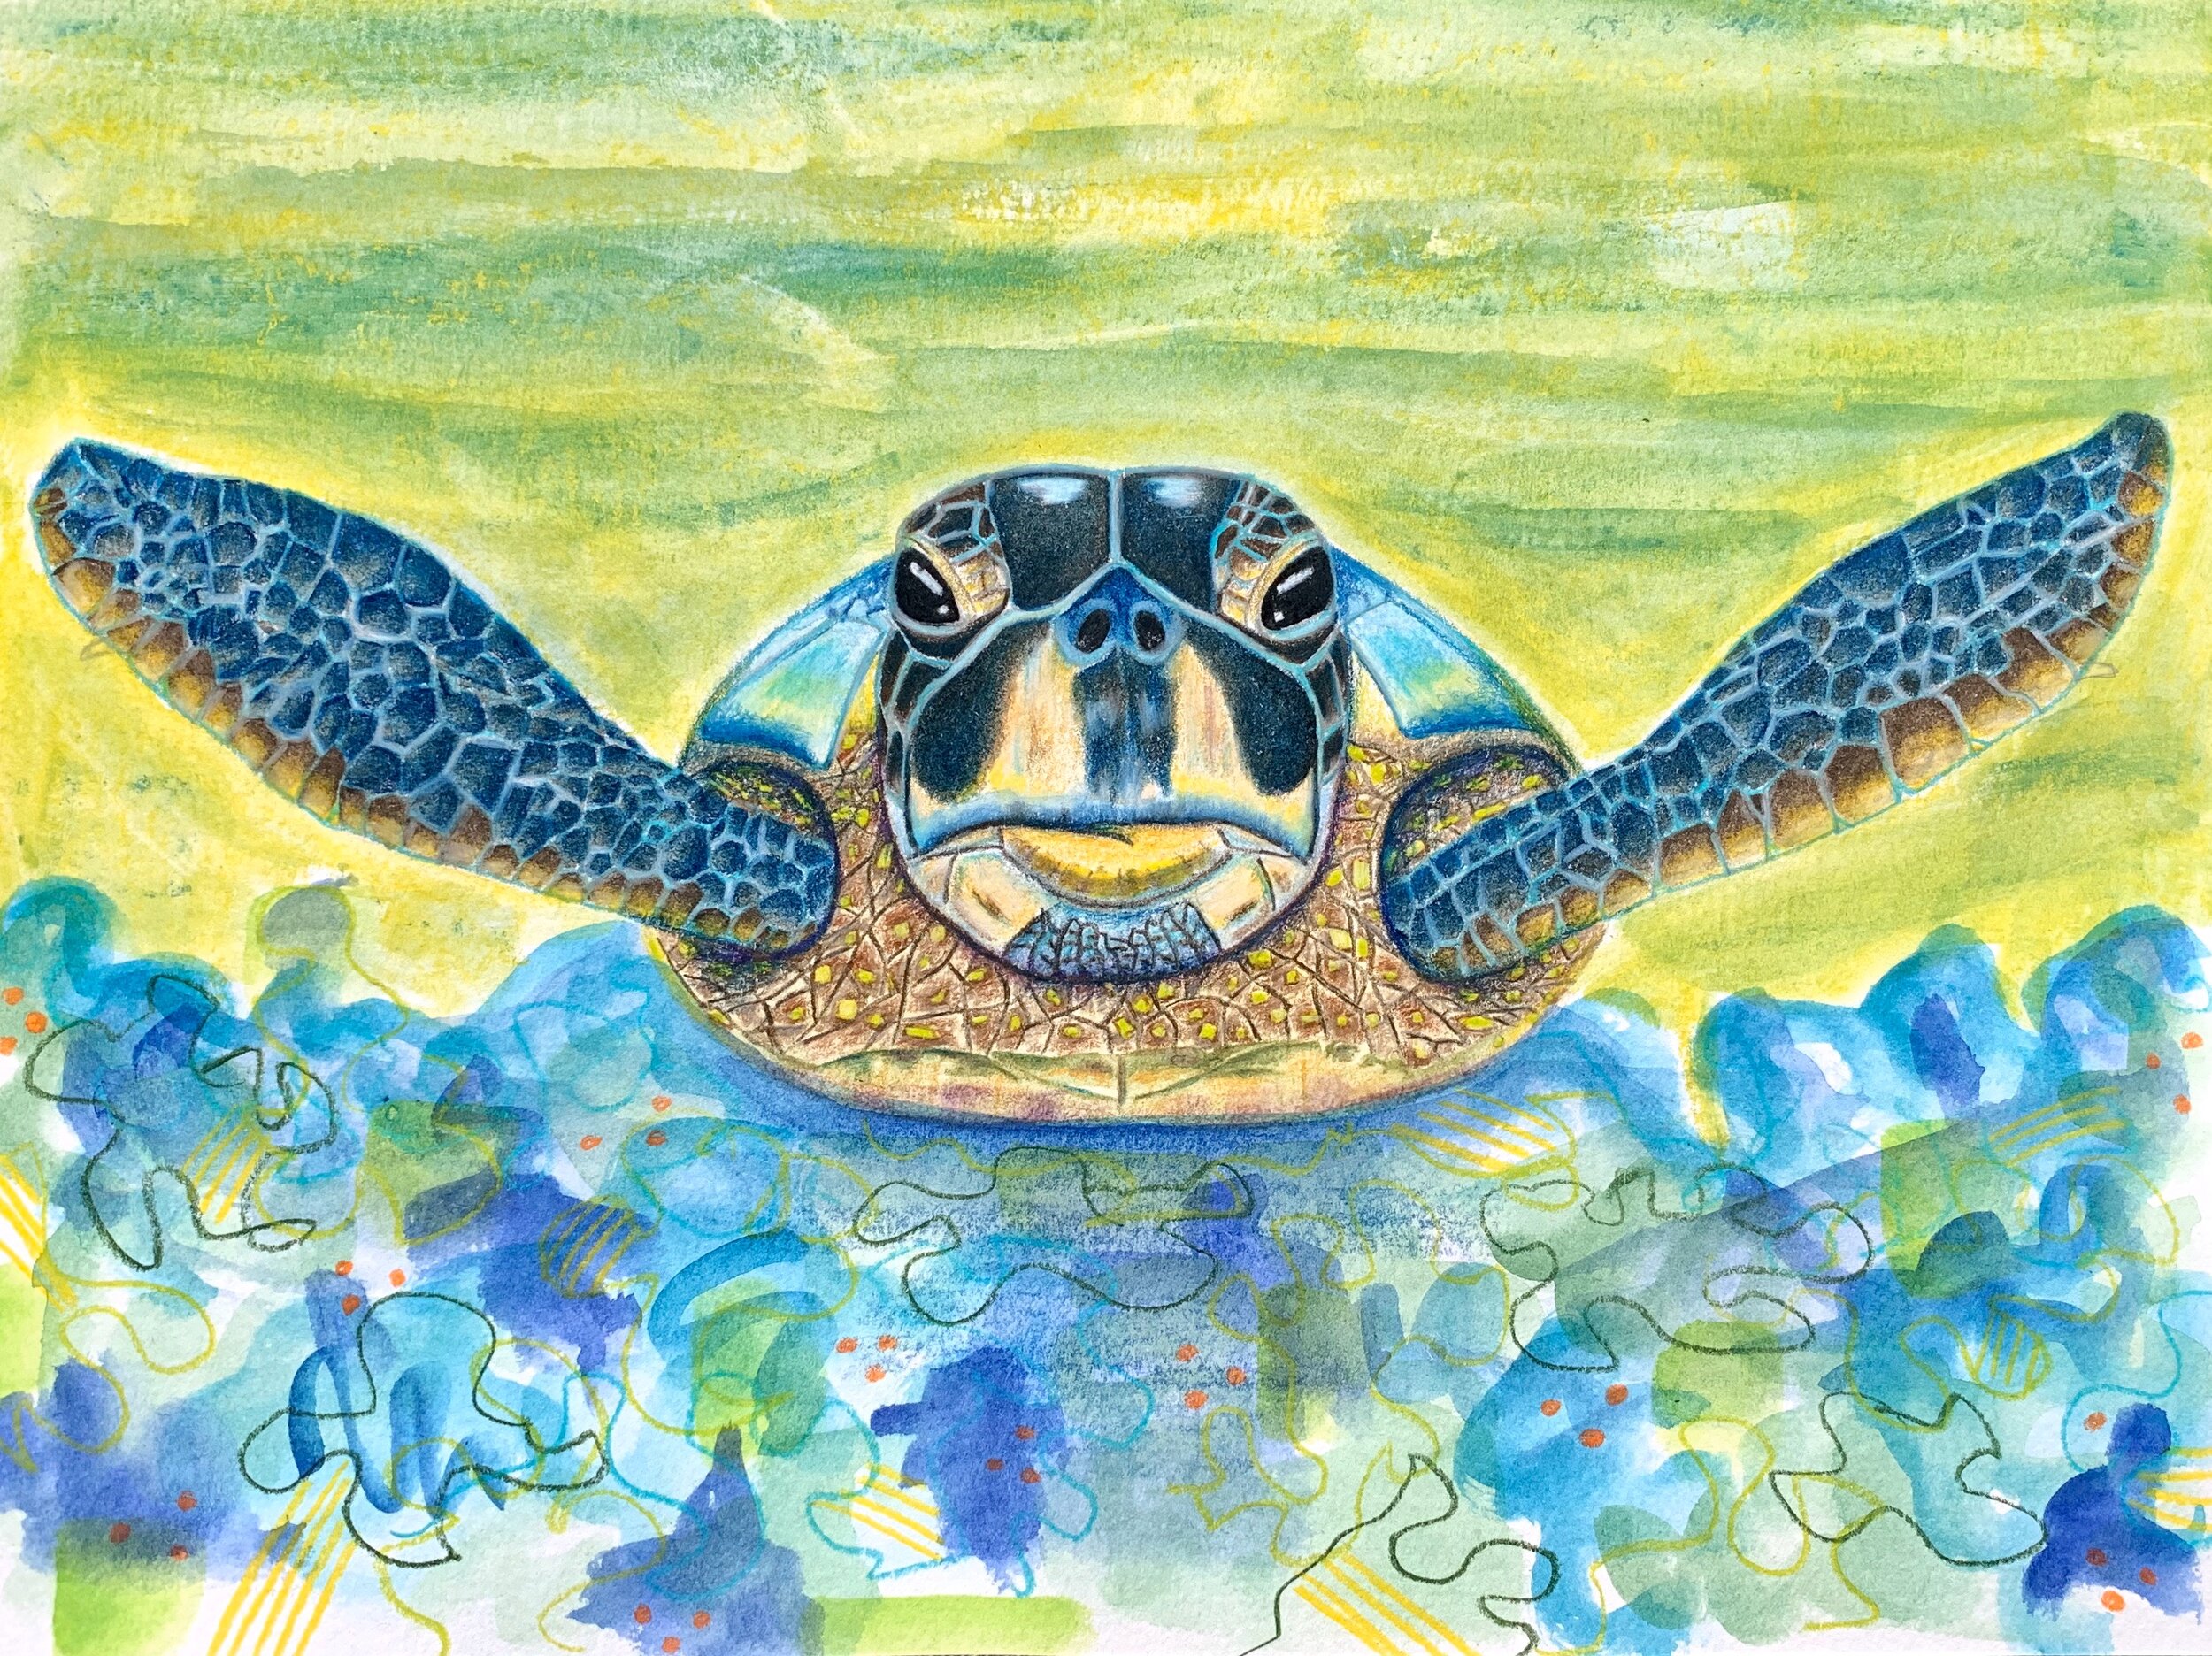 Sea Turtle in Mixed Media